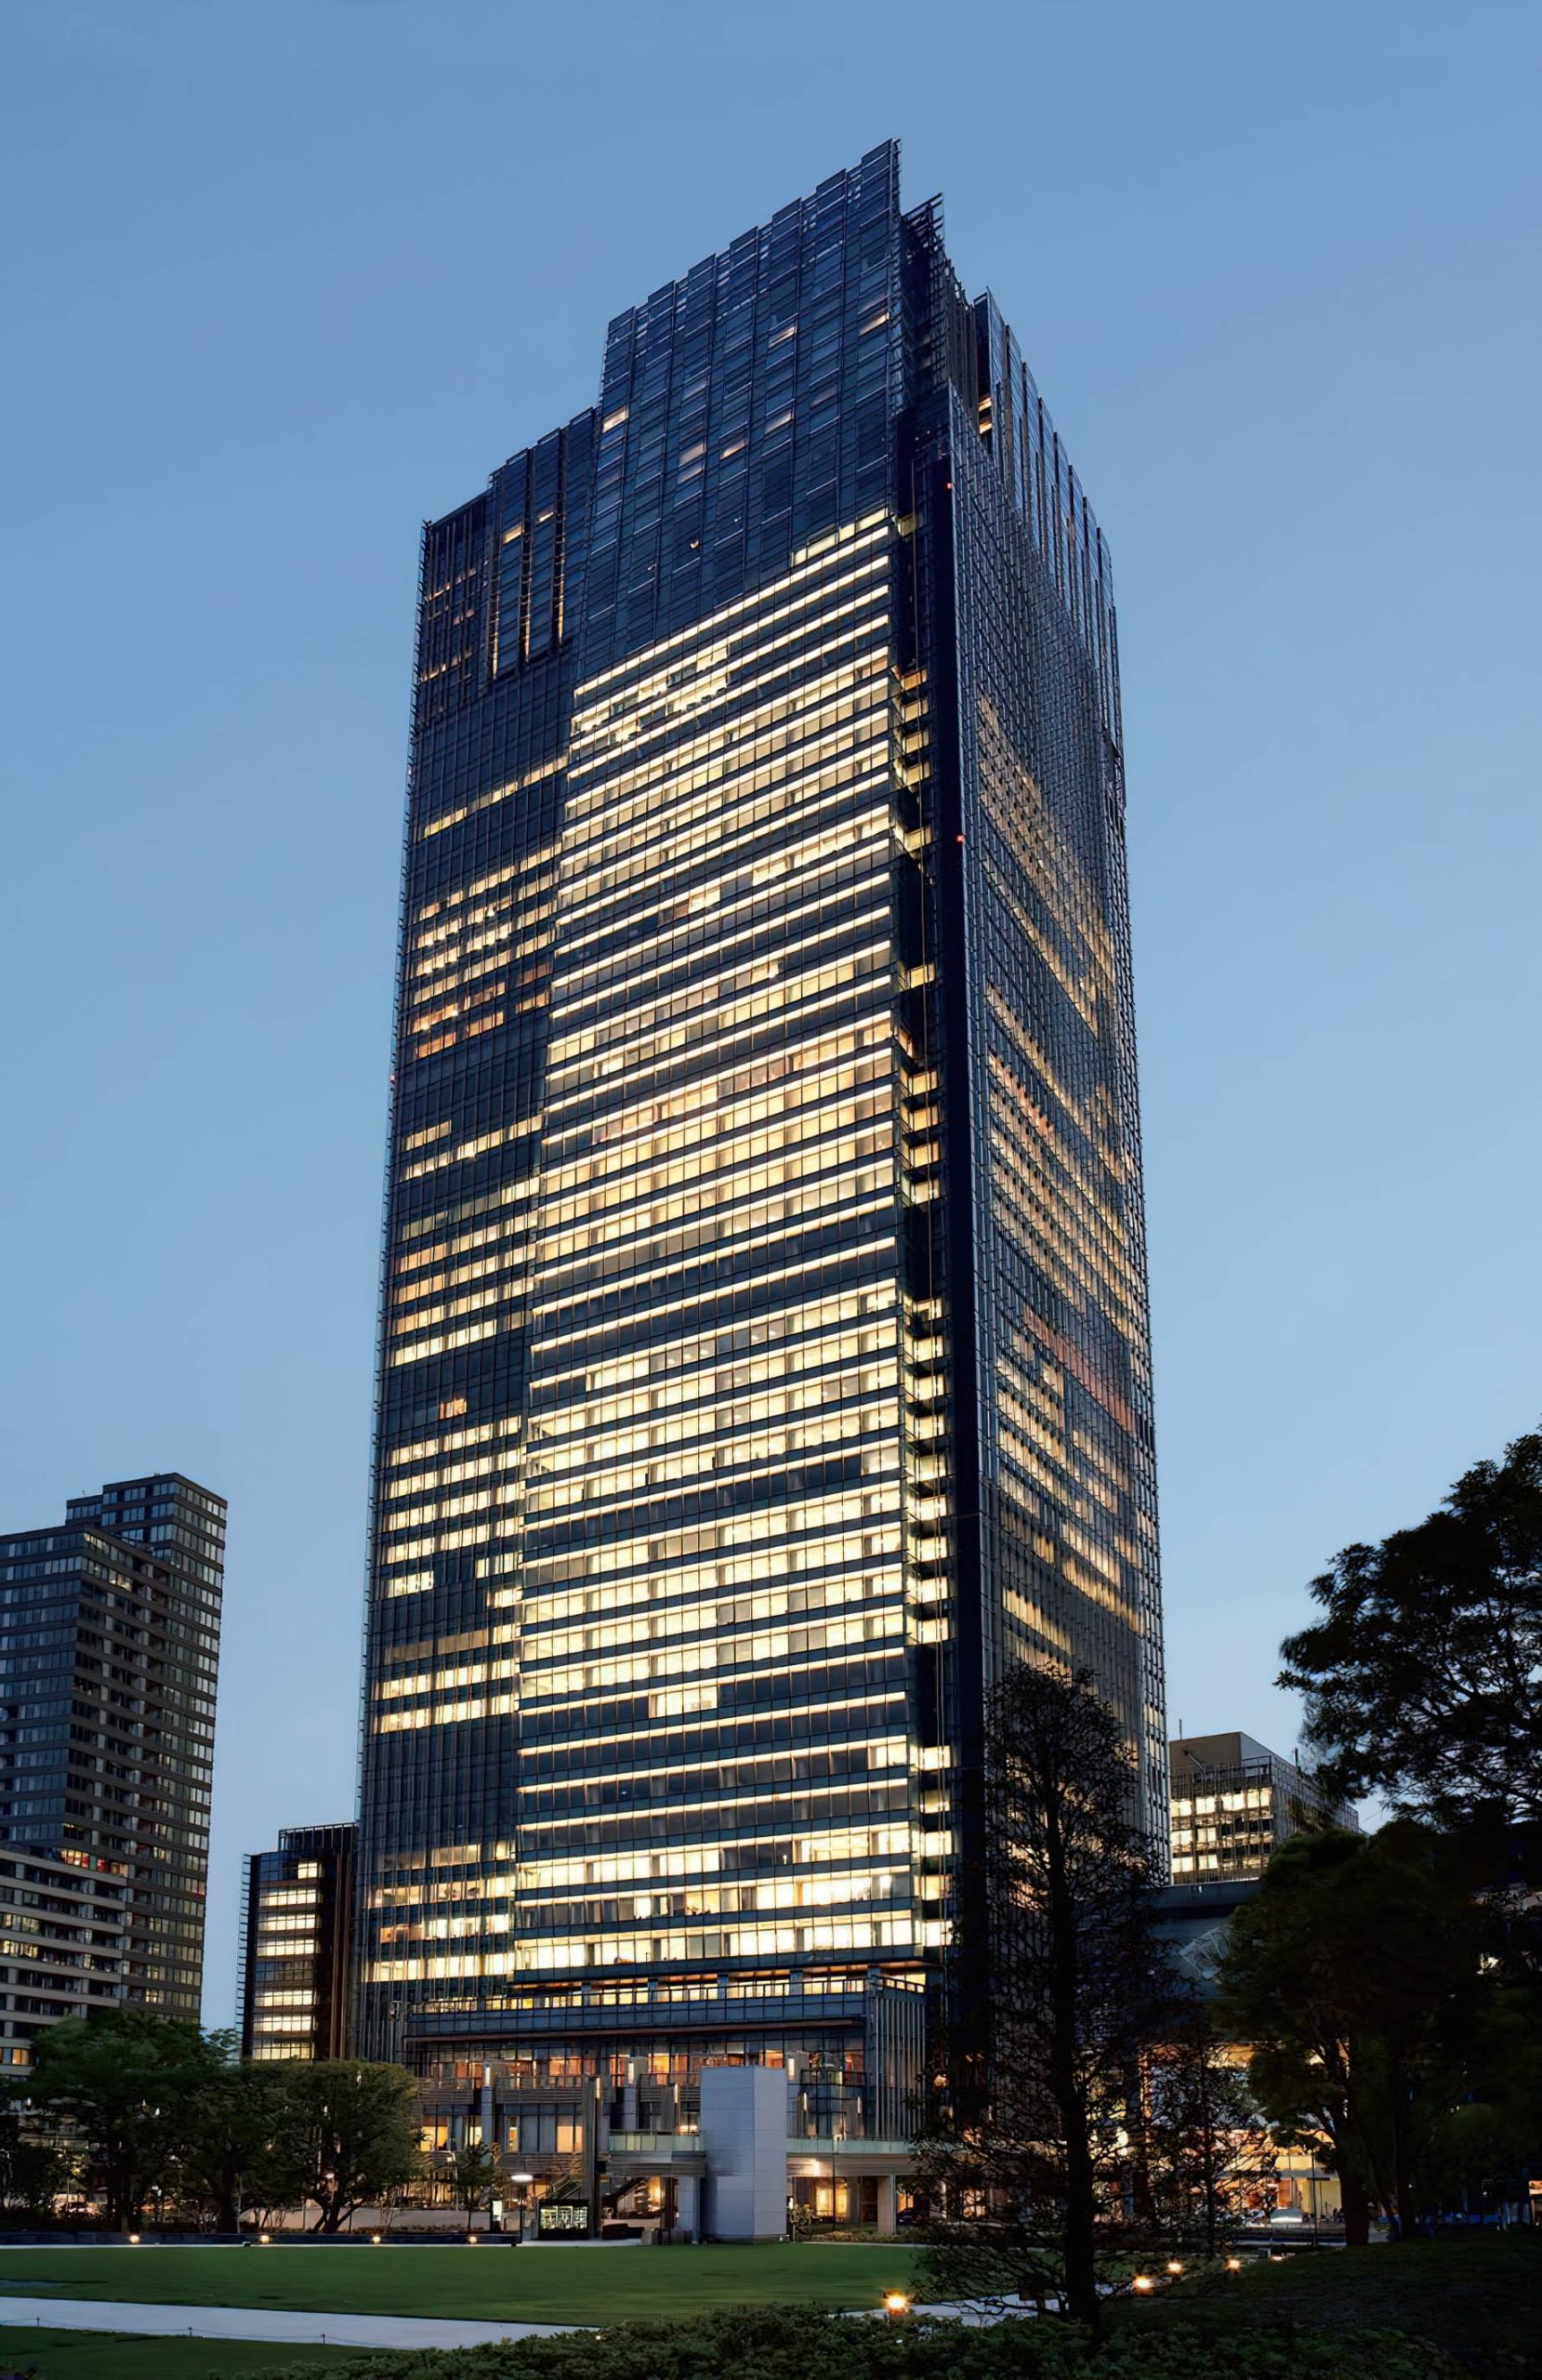 The Ritz-Carlton, Tokyo Hotel - Tokyo, Japan - External Tower View